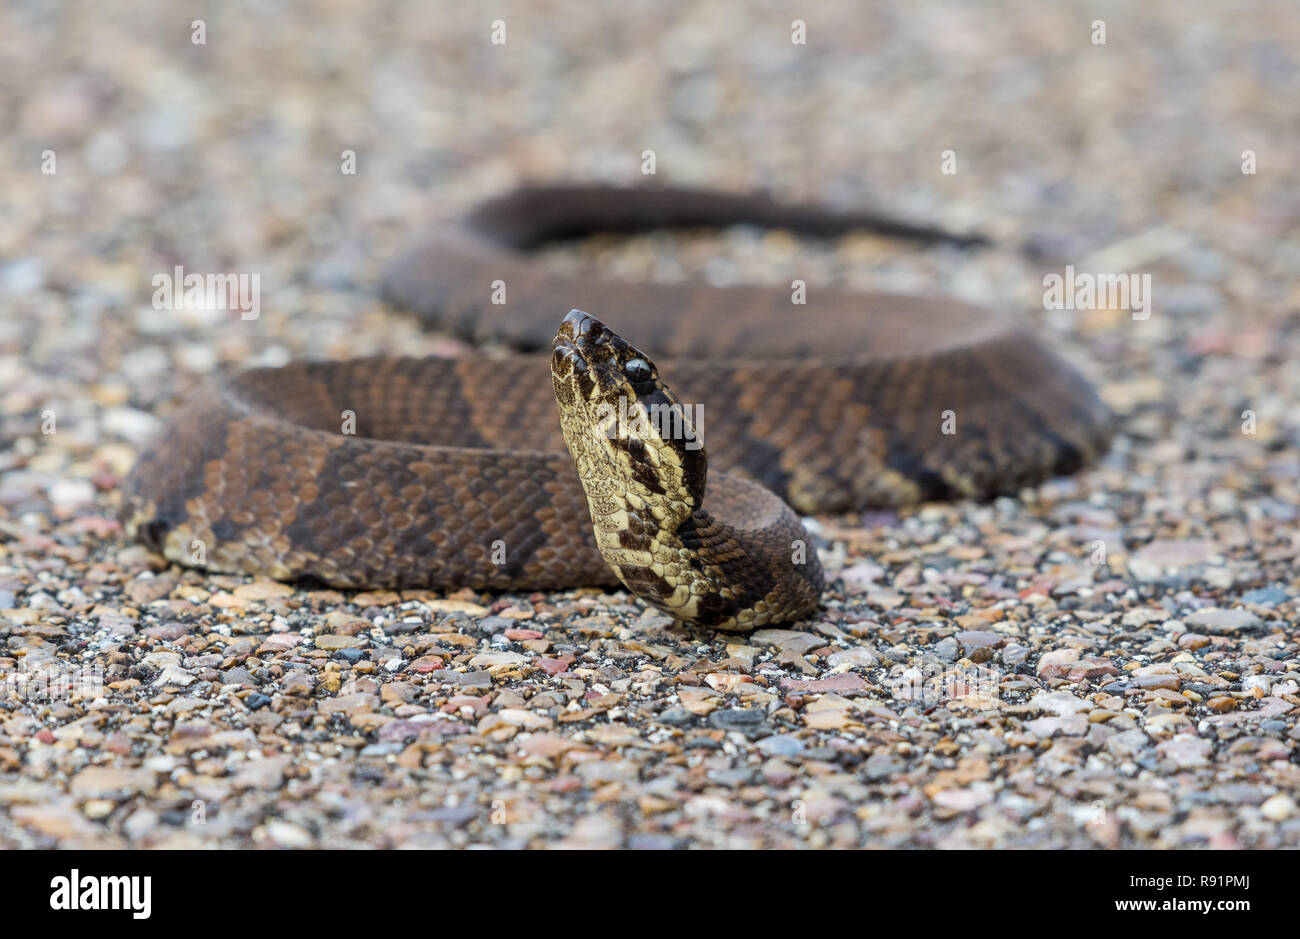 Cottonmouth snake (Agkistrodon piscivorus), a species of venomous pit viper found in SE United States. Aransas National Wildlife Refuge, Texas, USA. Stock Photo